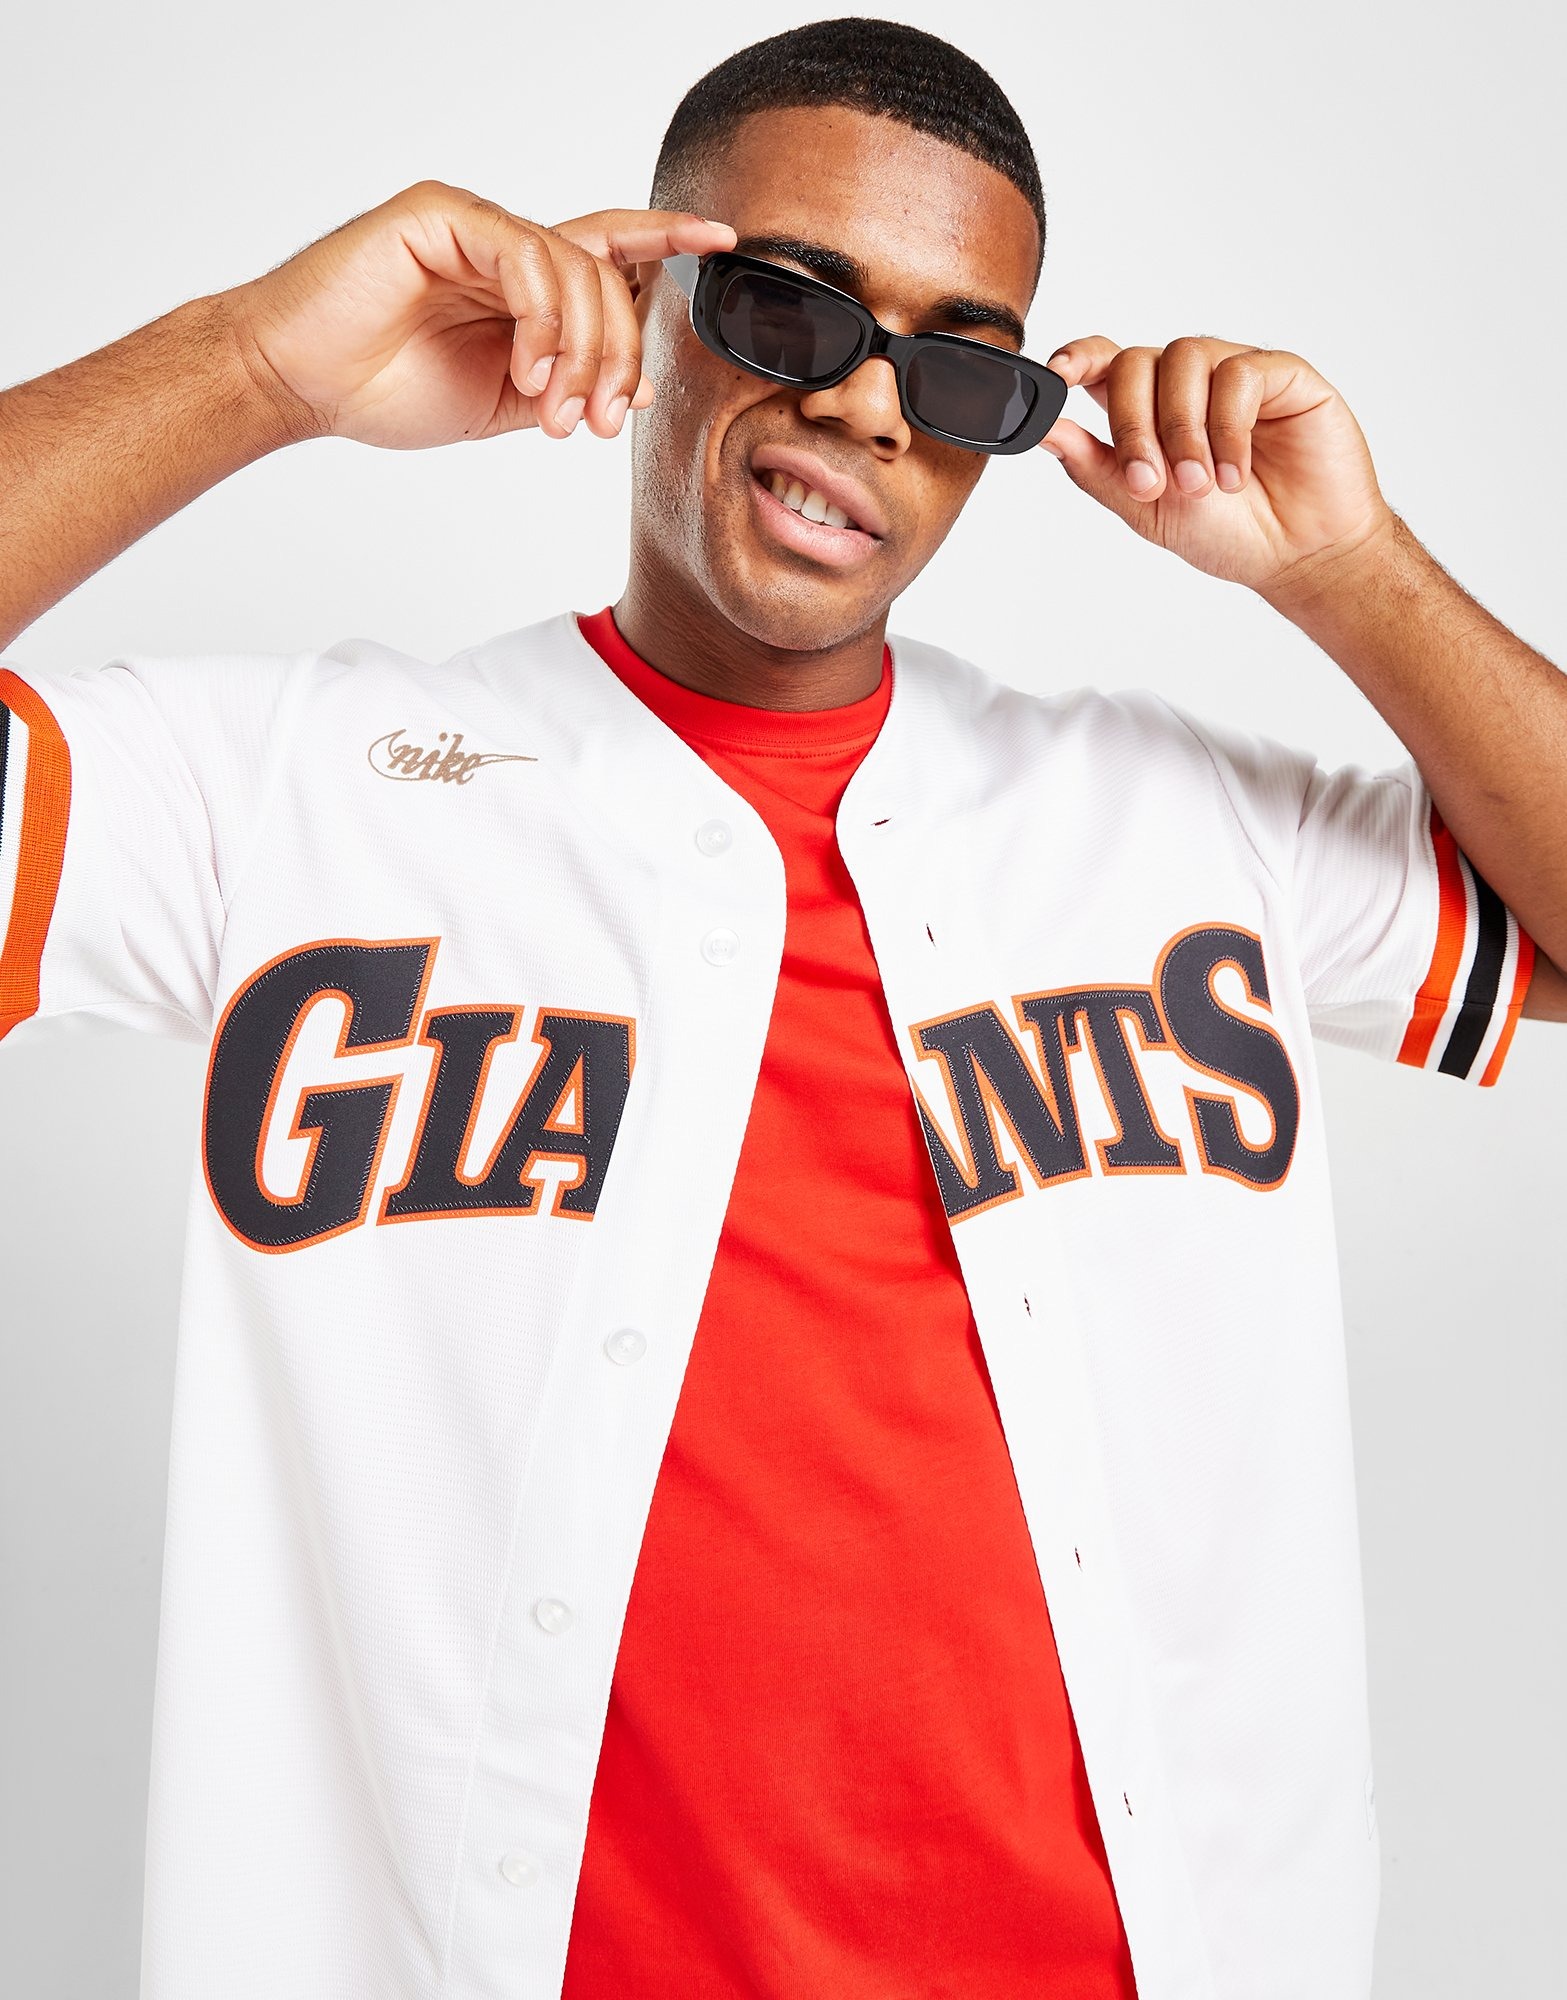 NEW San Francisco Giants YOUTH Medium (10-12) Adidas ORANGE Shirt